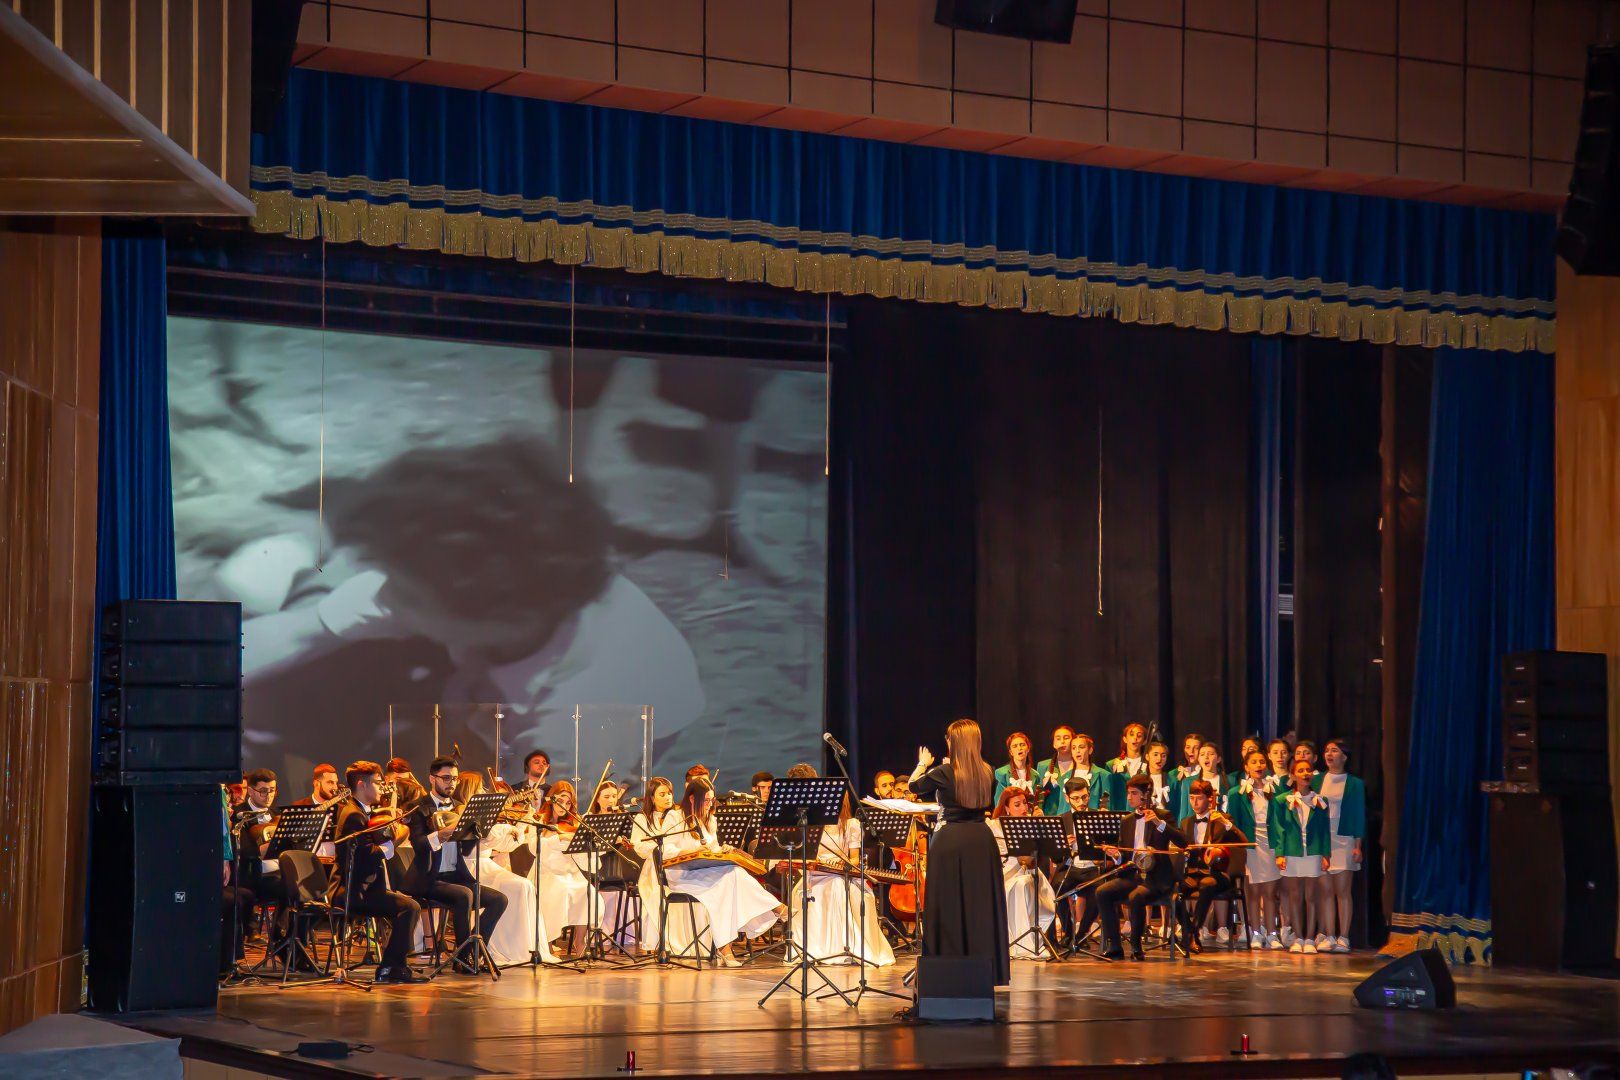 Avanqard Chamber Orchestra presents Kinokonsert multimedia show [PHOTOS]